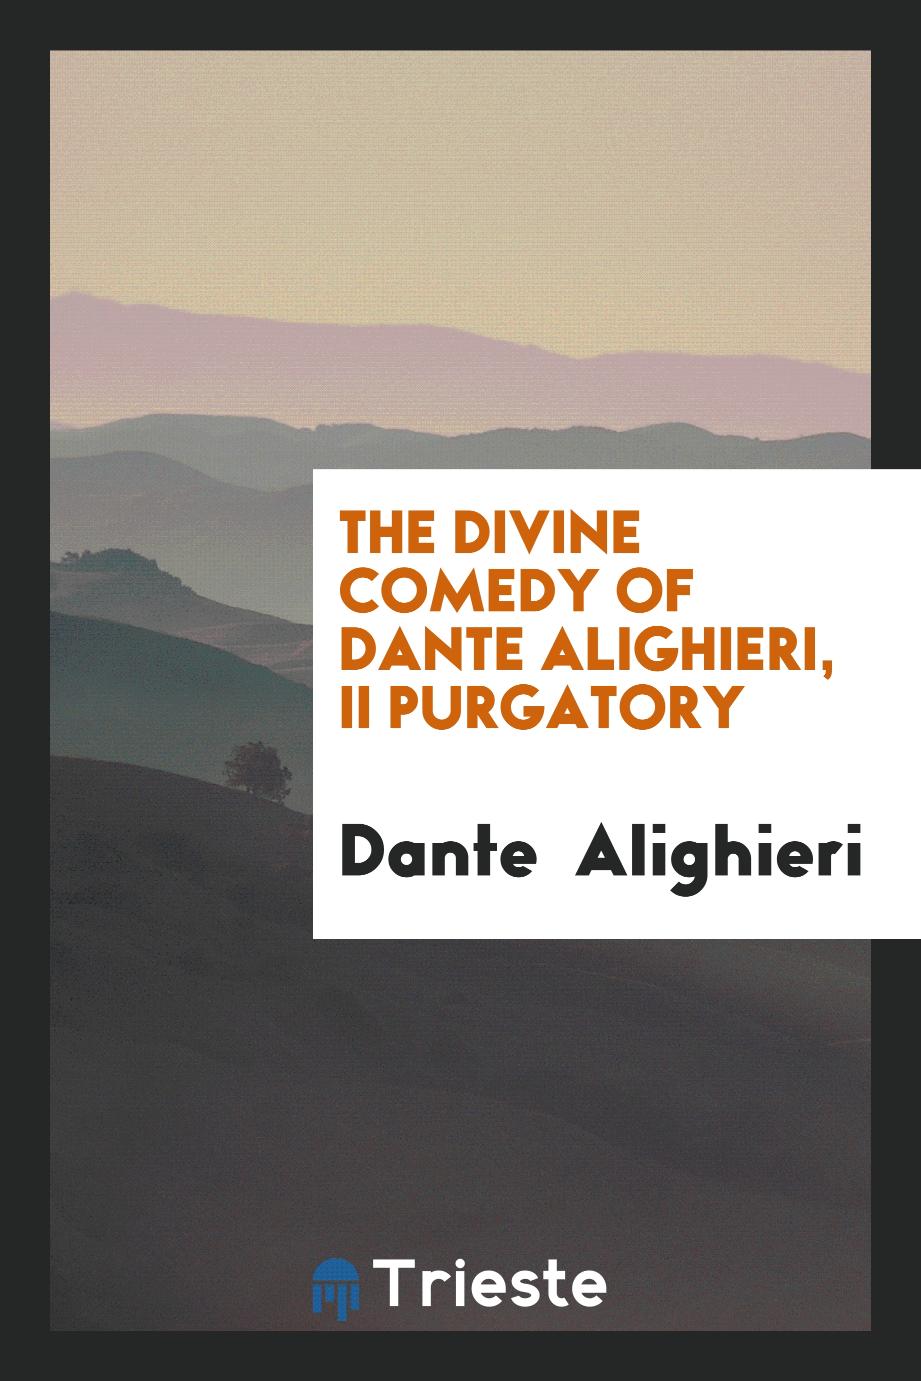 The Divine comedy of Dante Alighieri, II purgatory